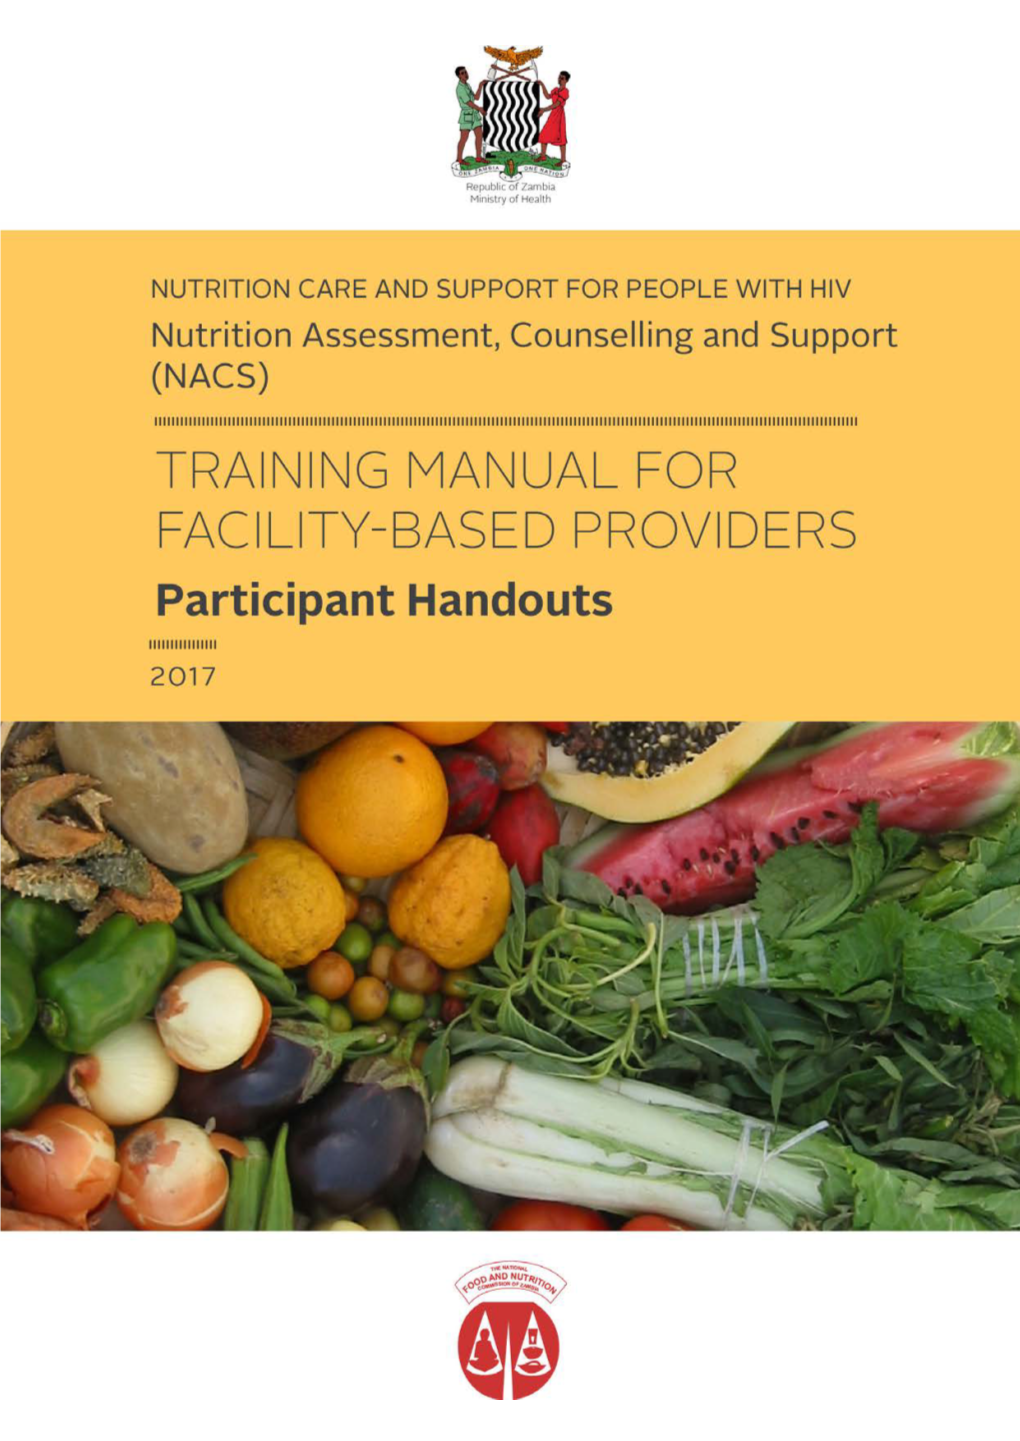 (NACS) Training Manual for Facility-Based Providers: Participant Handouts